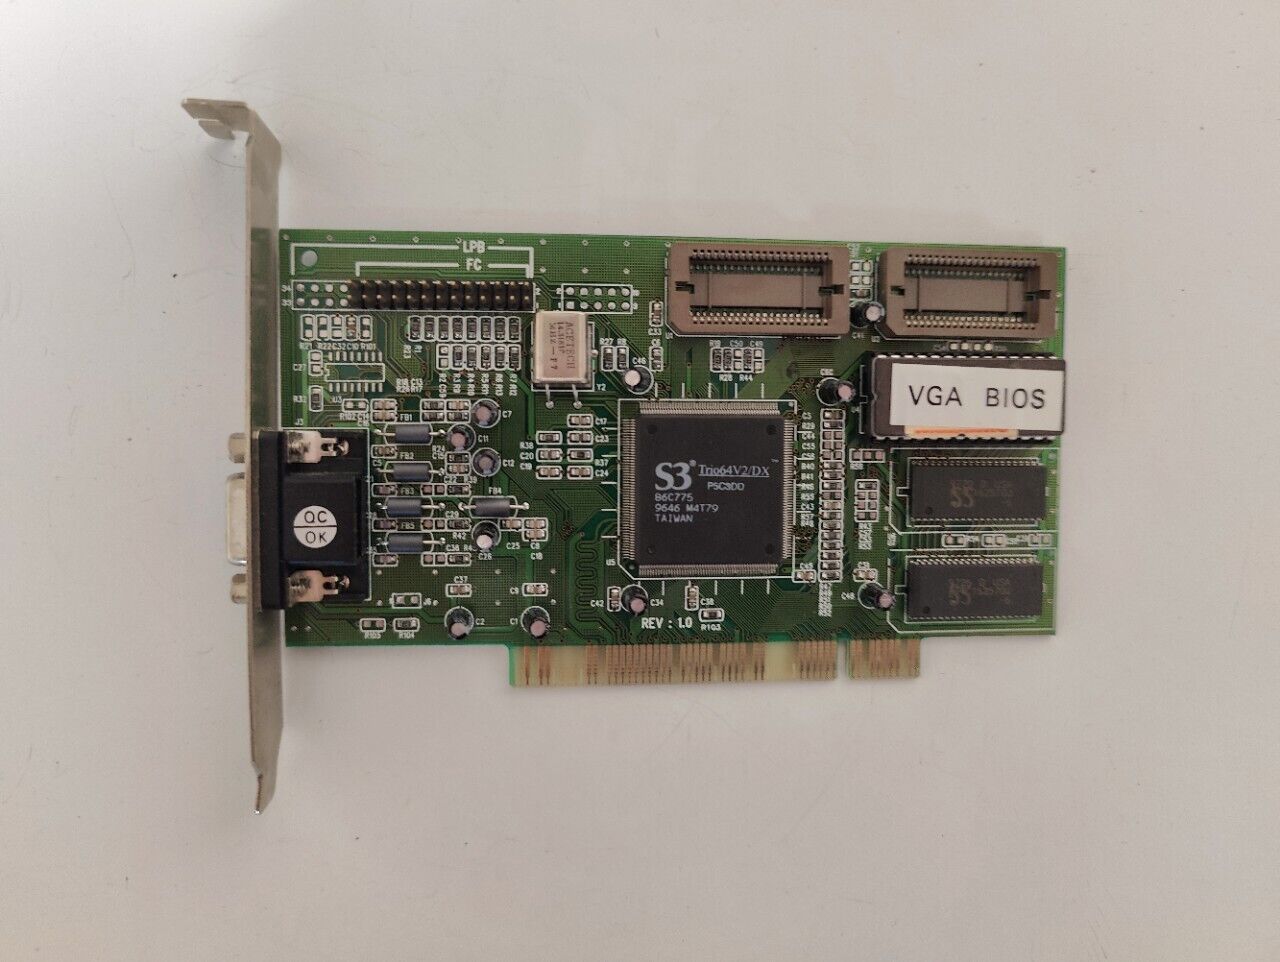 S3 Trio64V2/DX Sigma Desings REALmagic64 1 MB PCI Video Graphics Card